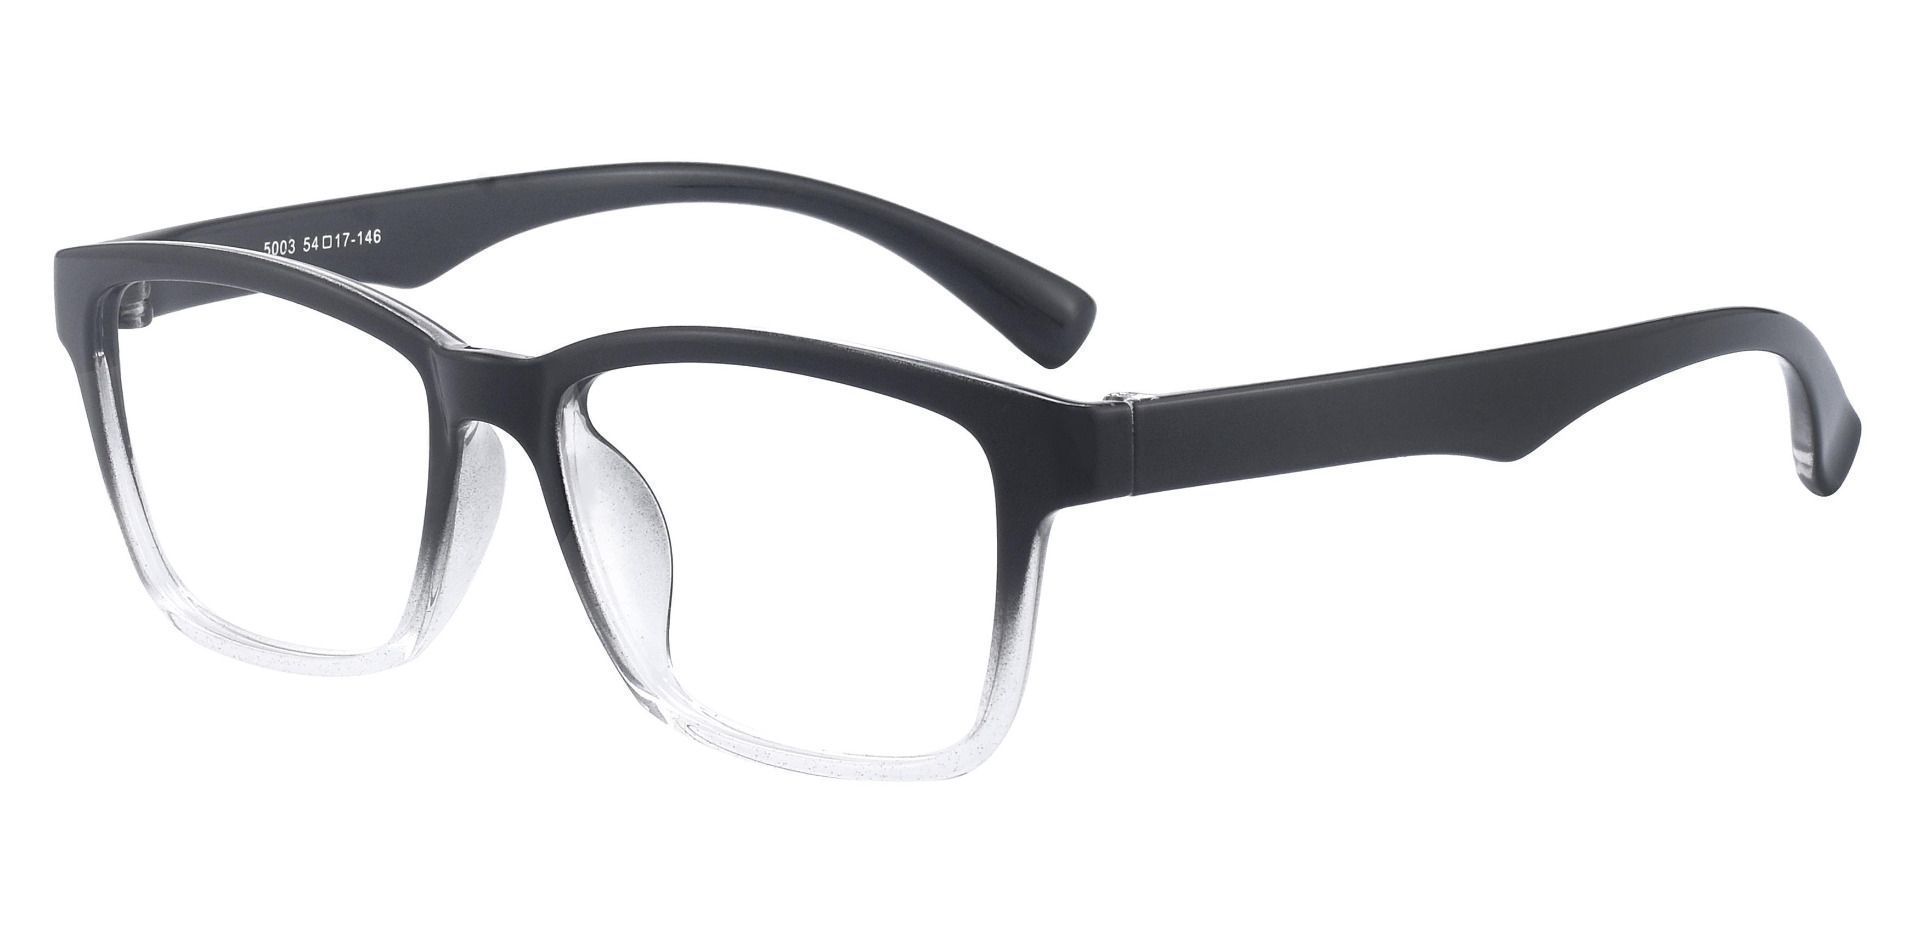 Hoover Rectangle Prescription Glasses - Black